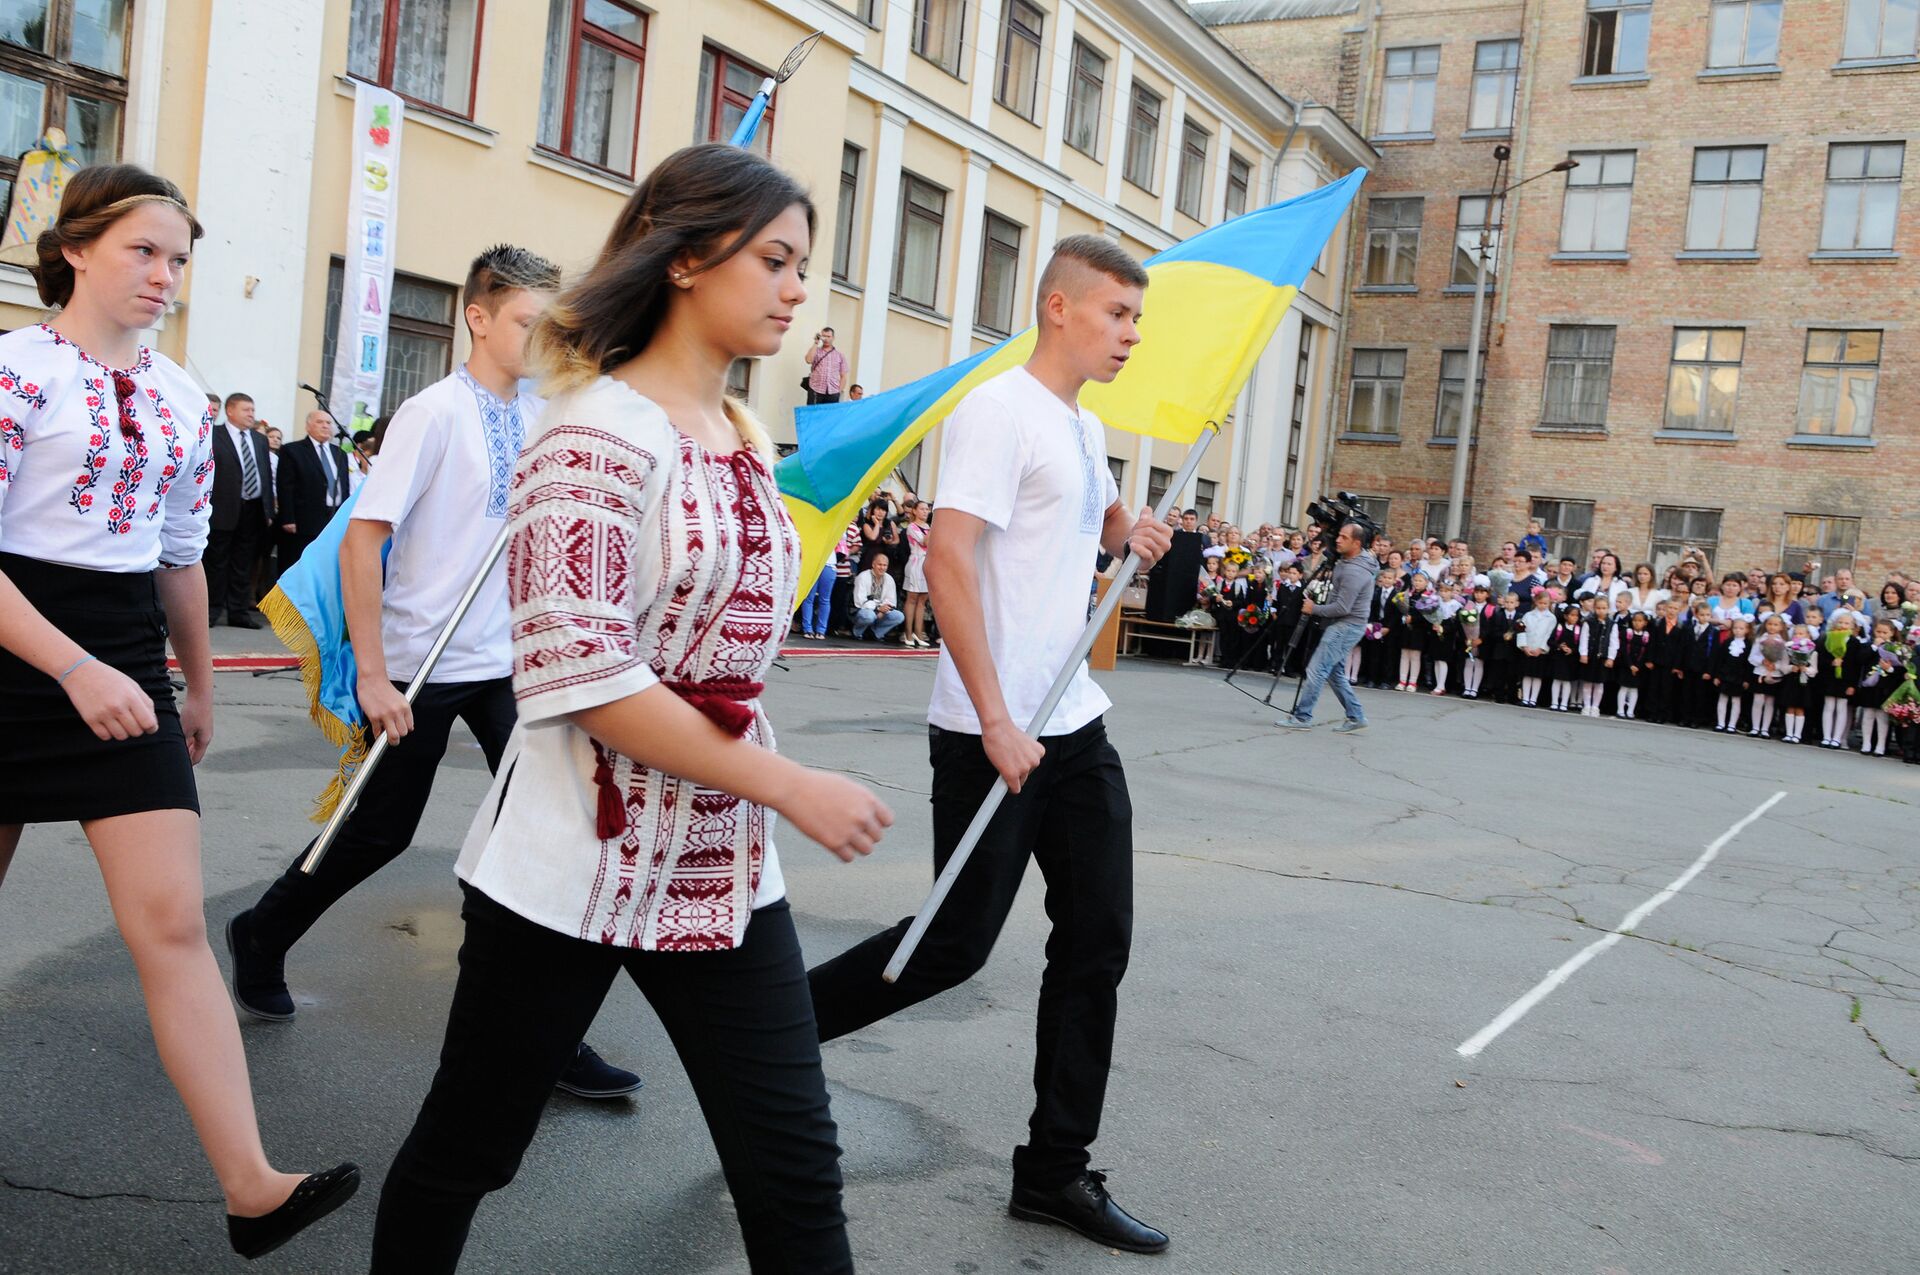 School year begins in Ukraine - Sputnik International, 1920, 12.06.2022